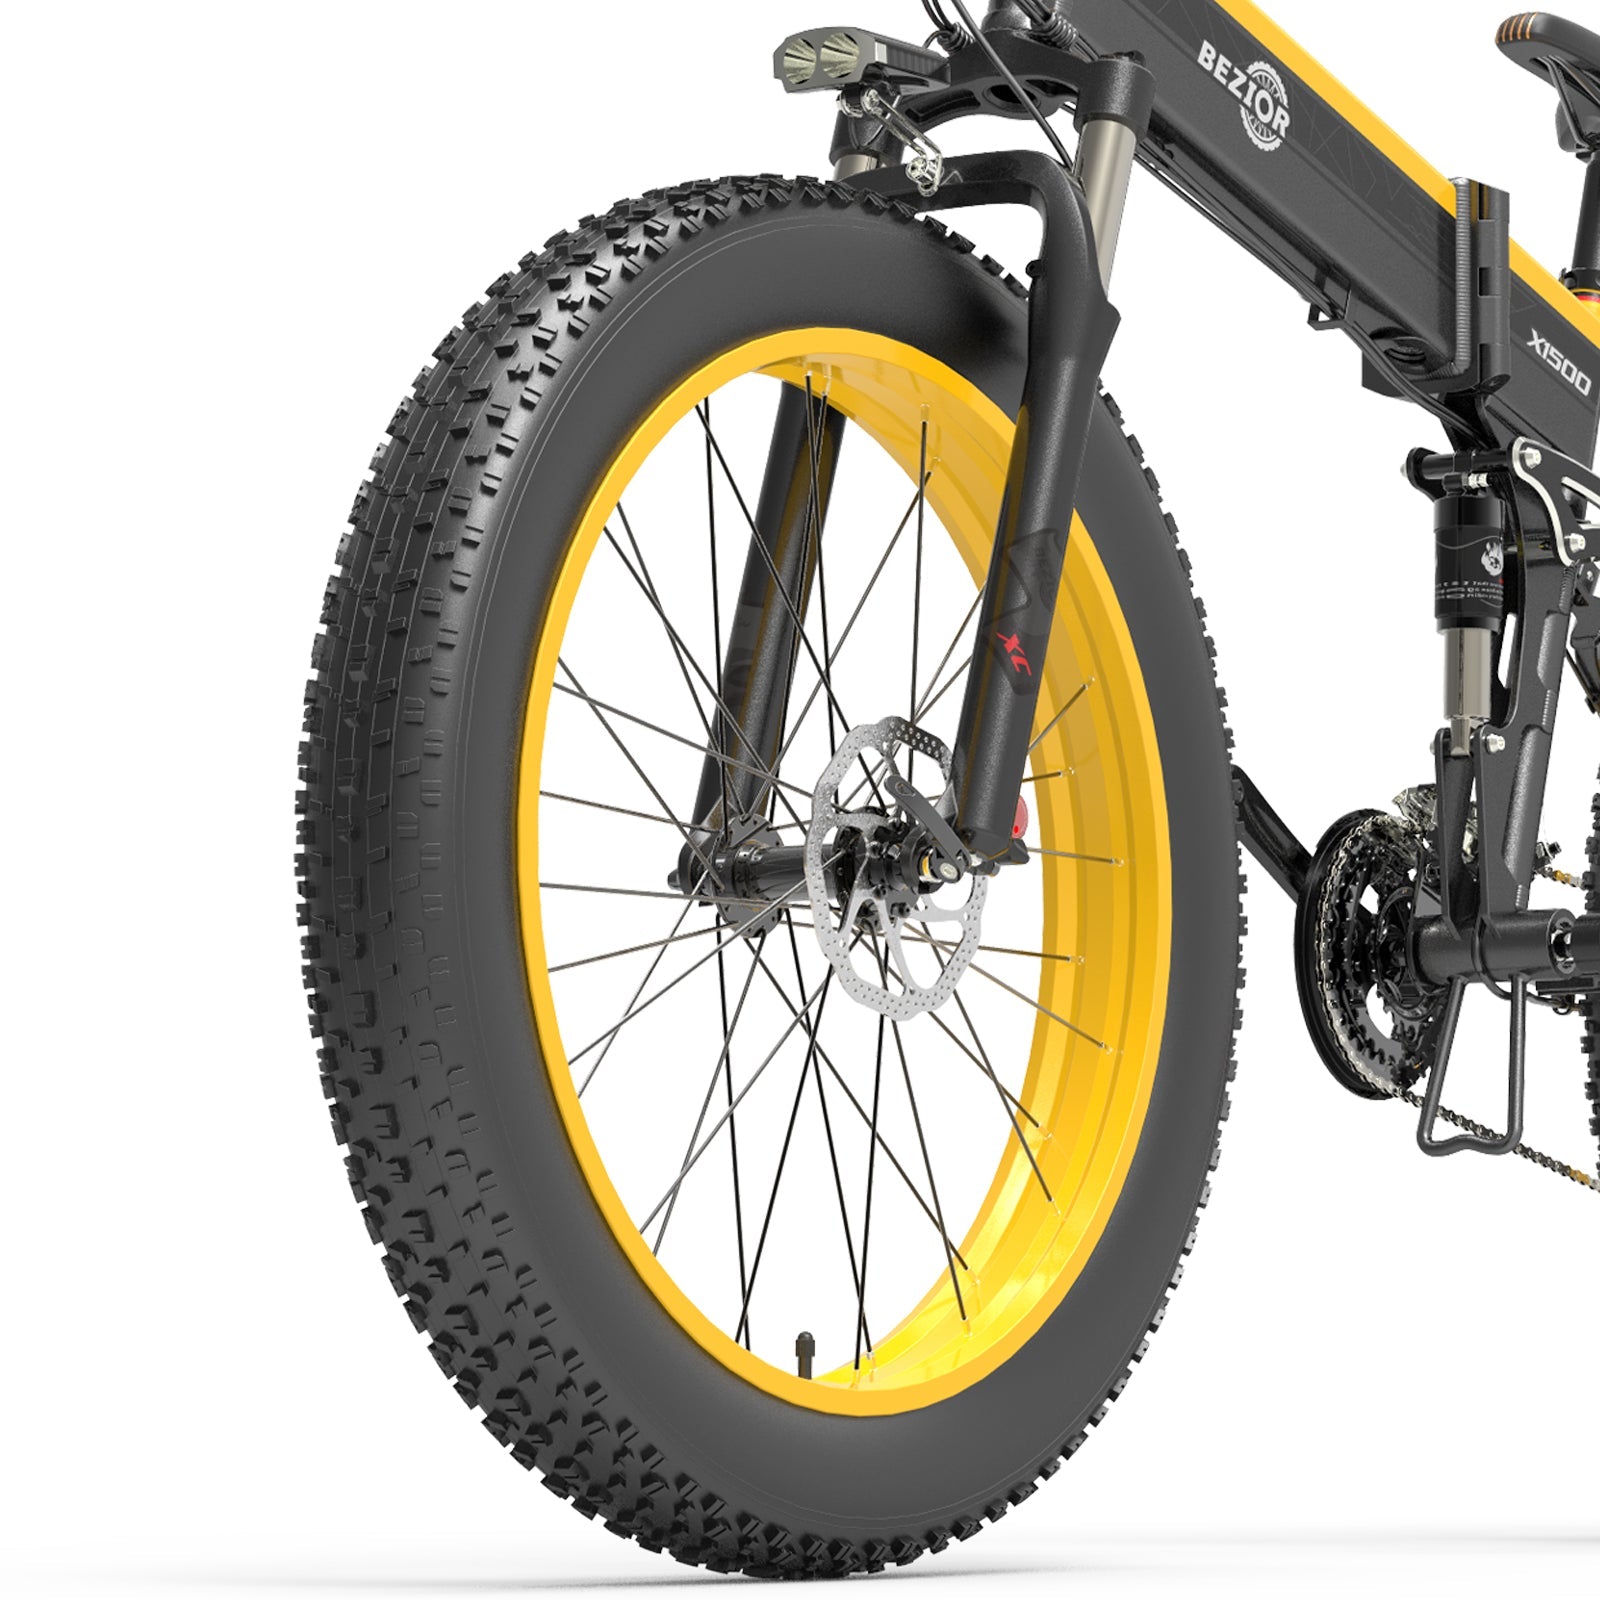 BEZIOR Ebike Wheels 26*4.0 inch Bike Inner Tubes 26*1.95 Presta Valve Bicycle Fat Tires